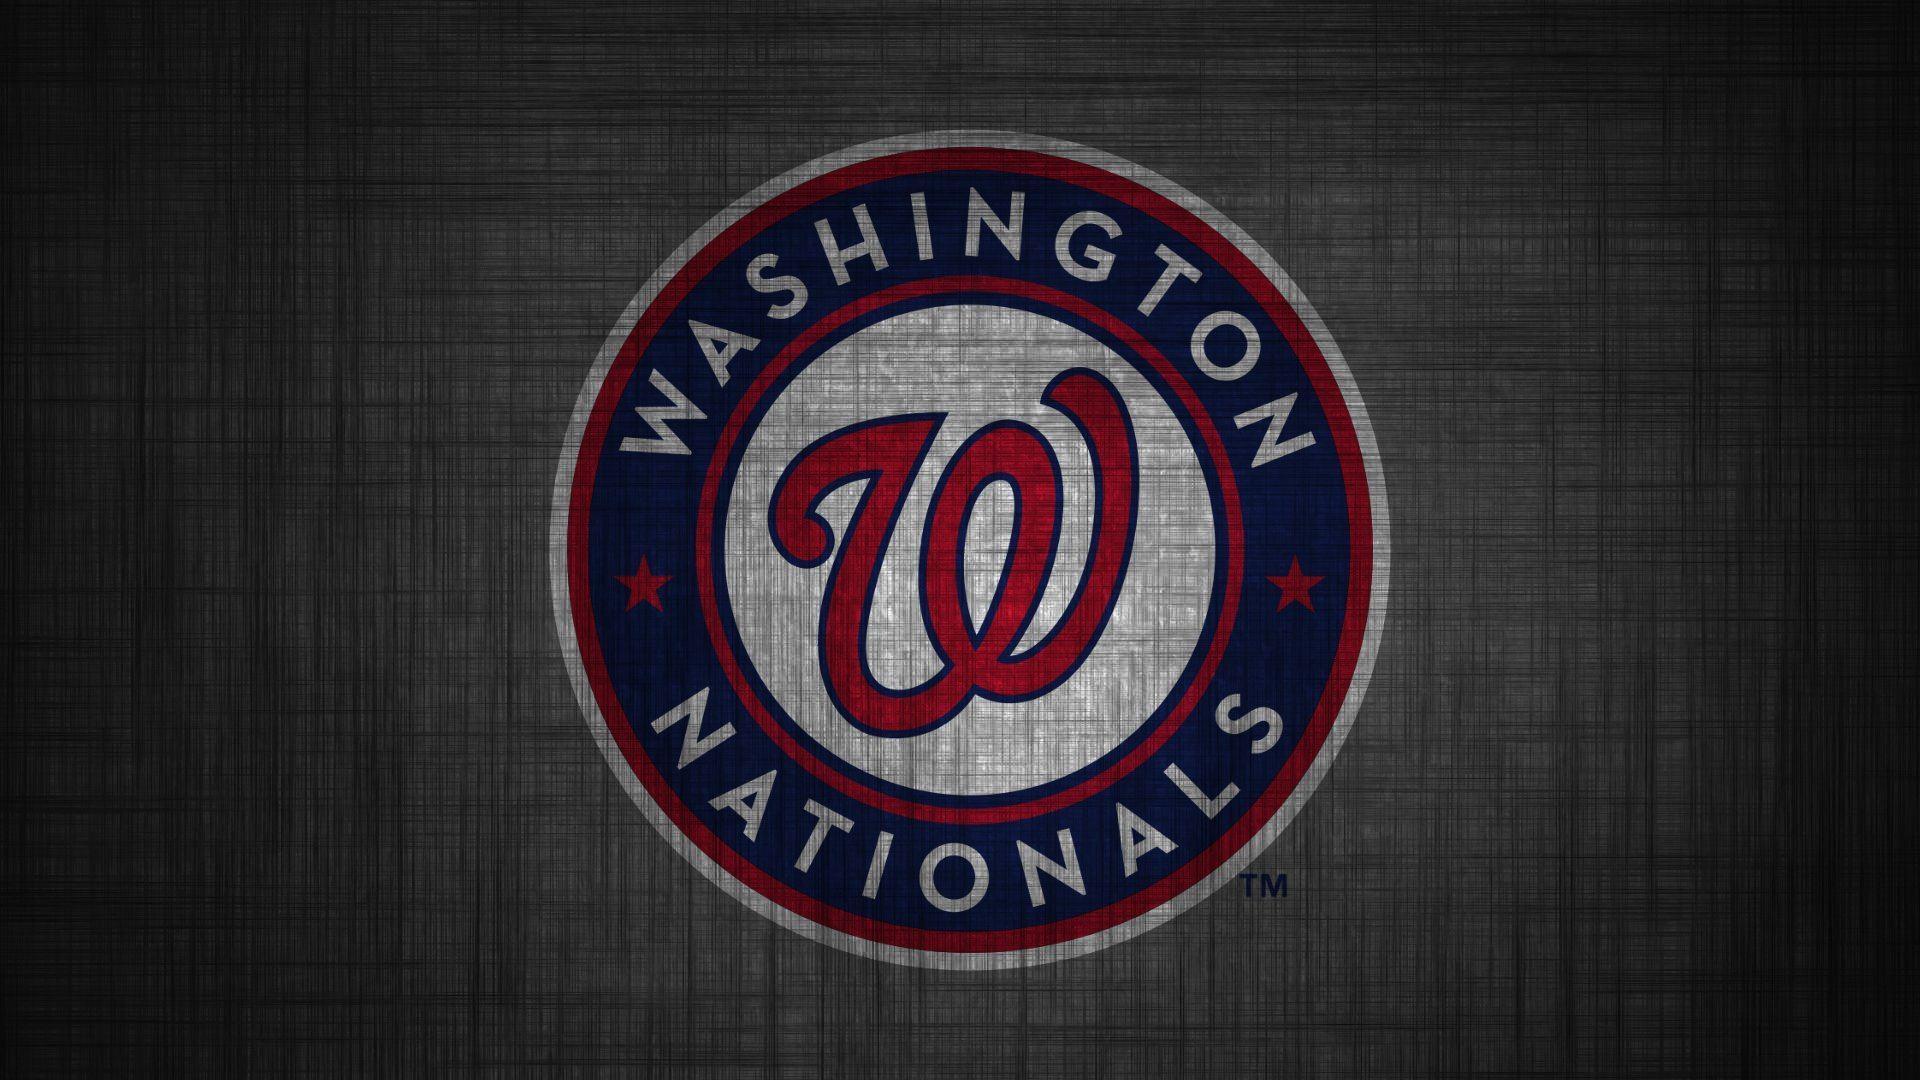 Washington Nationals Wallpaper Free, PC 41 Washington Nationals